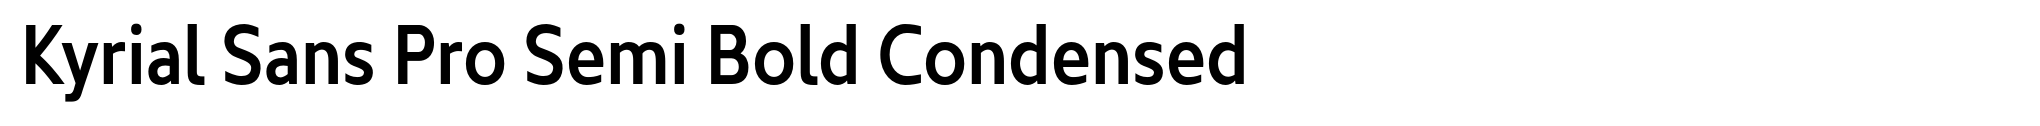 Kyrial Sans Pro Semi Bold Condensed image